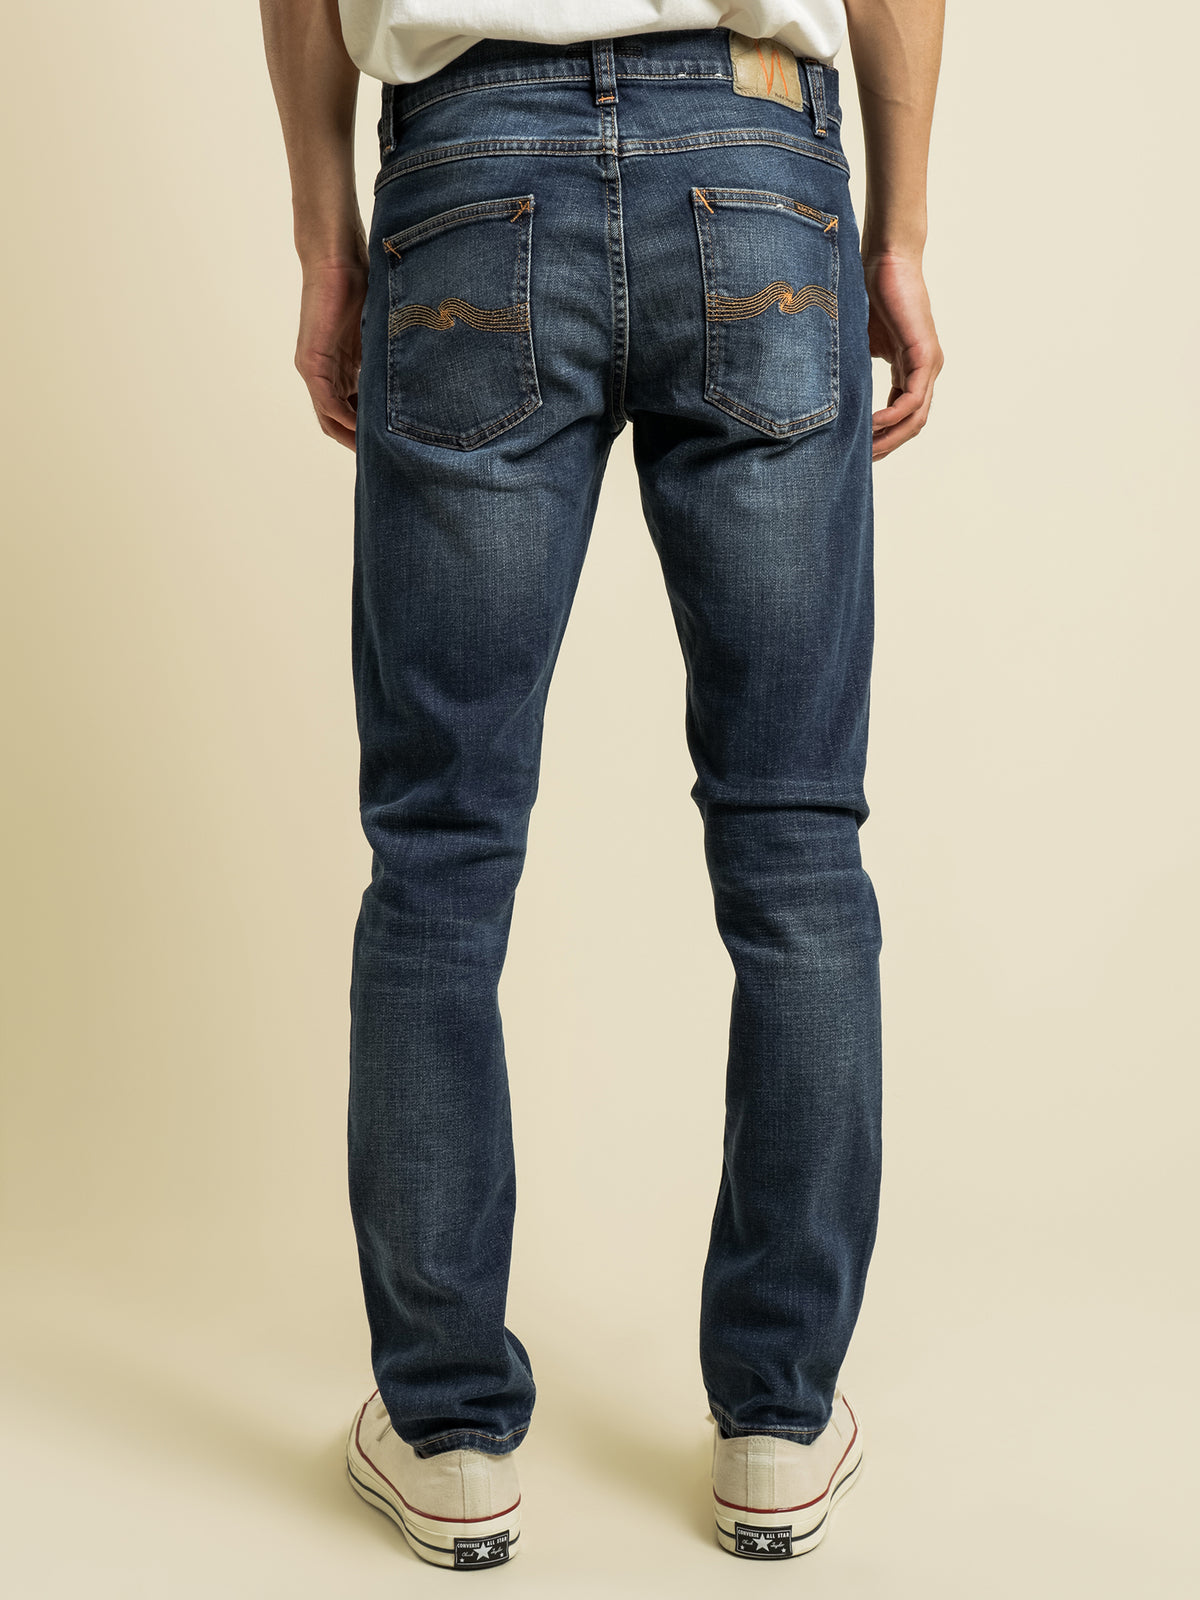 Lean Dean Jeans in Indigo Myth